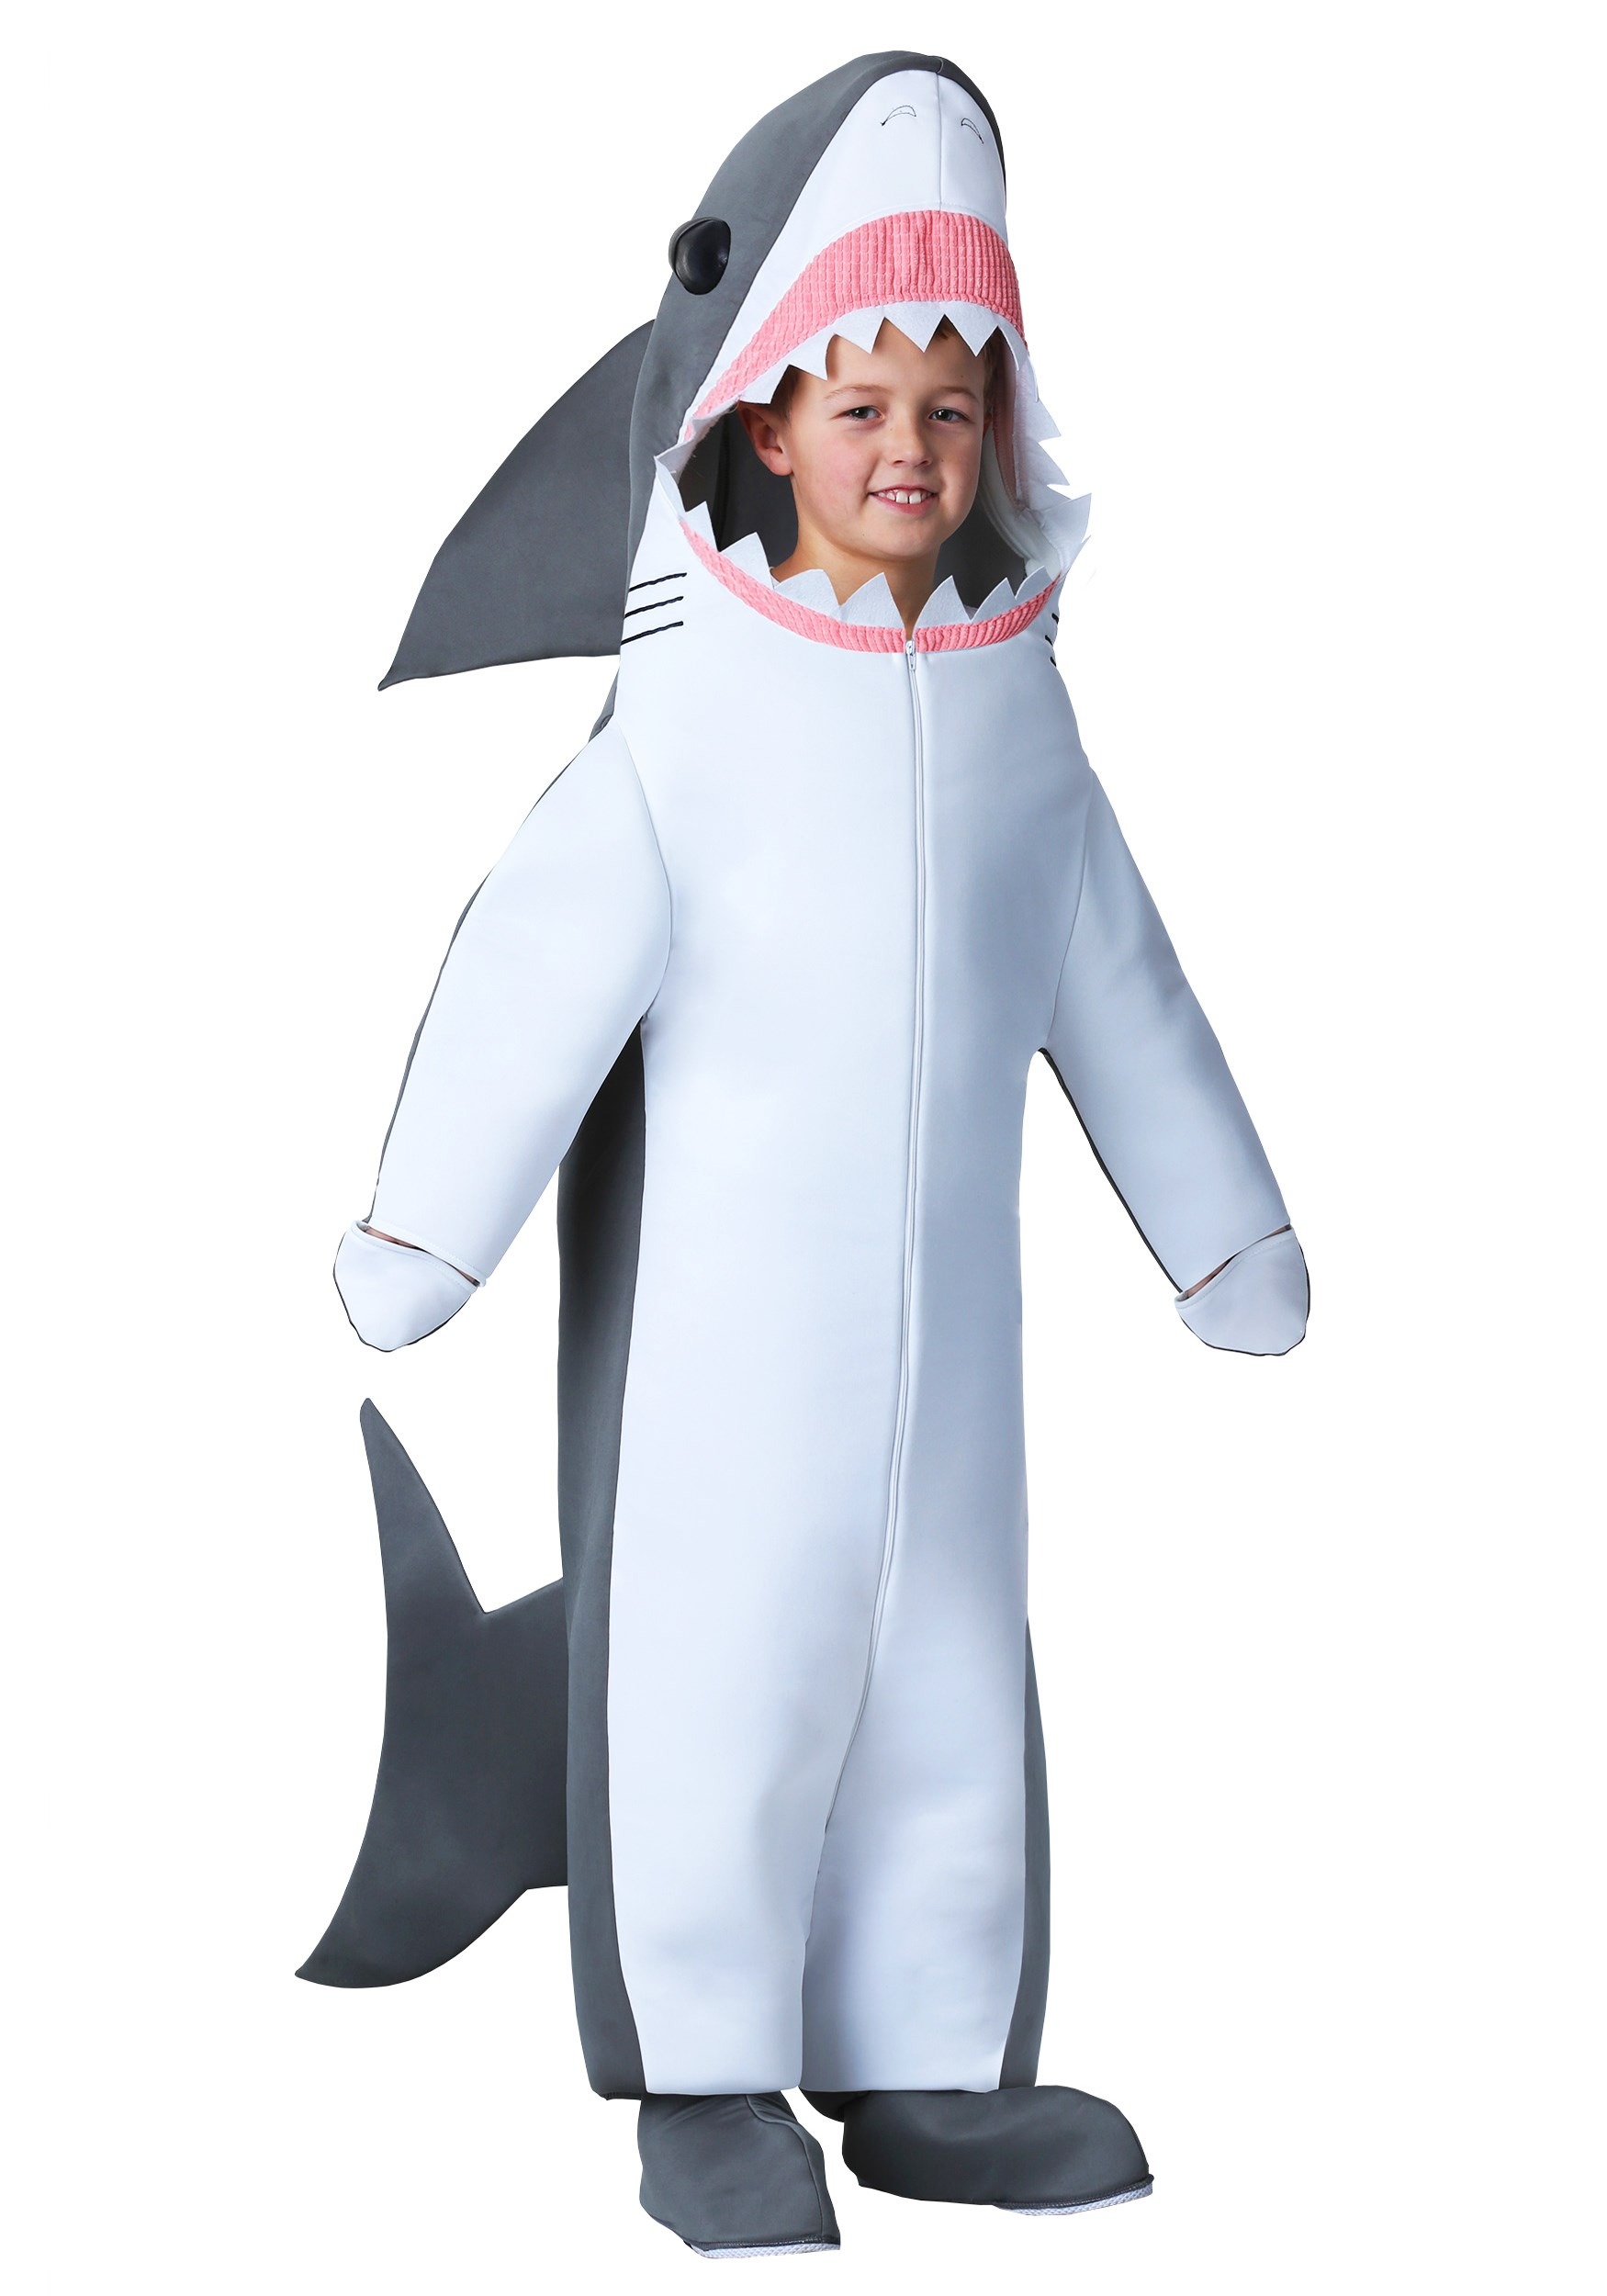 Photos - Fancy Dress Great White FUN Costumes  Shark Kid's Costume Pink/Gray/White FUN26 